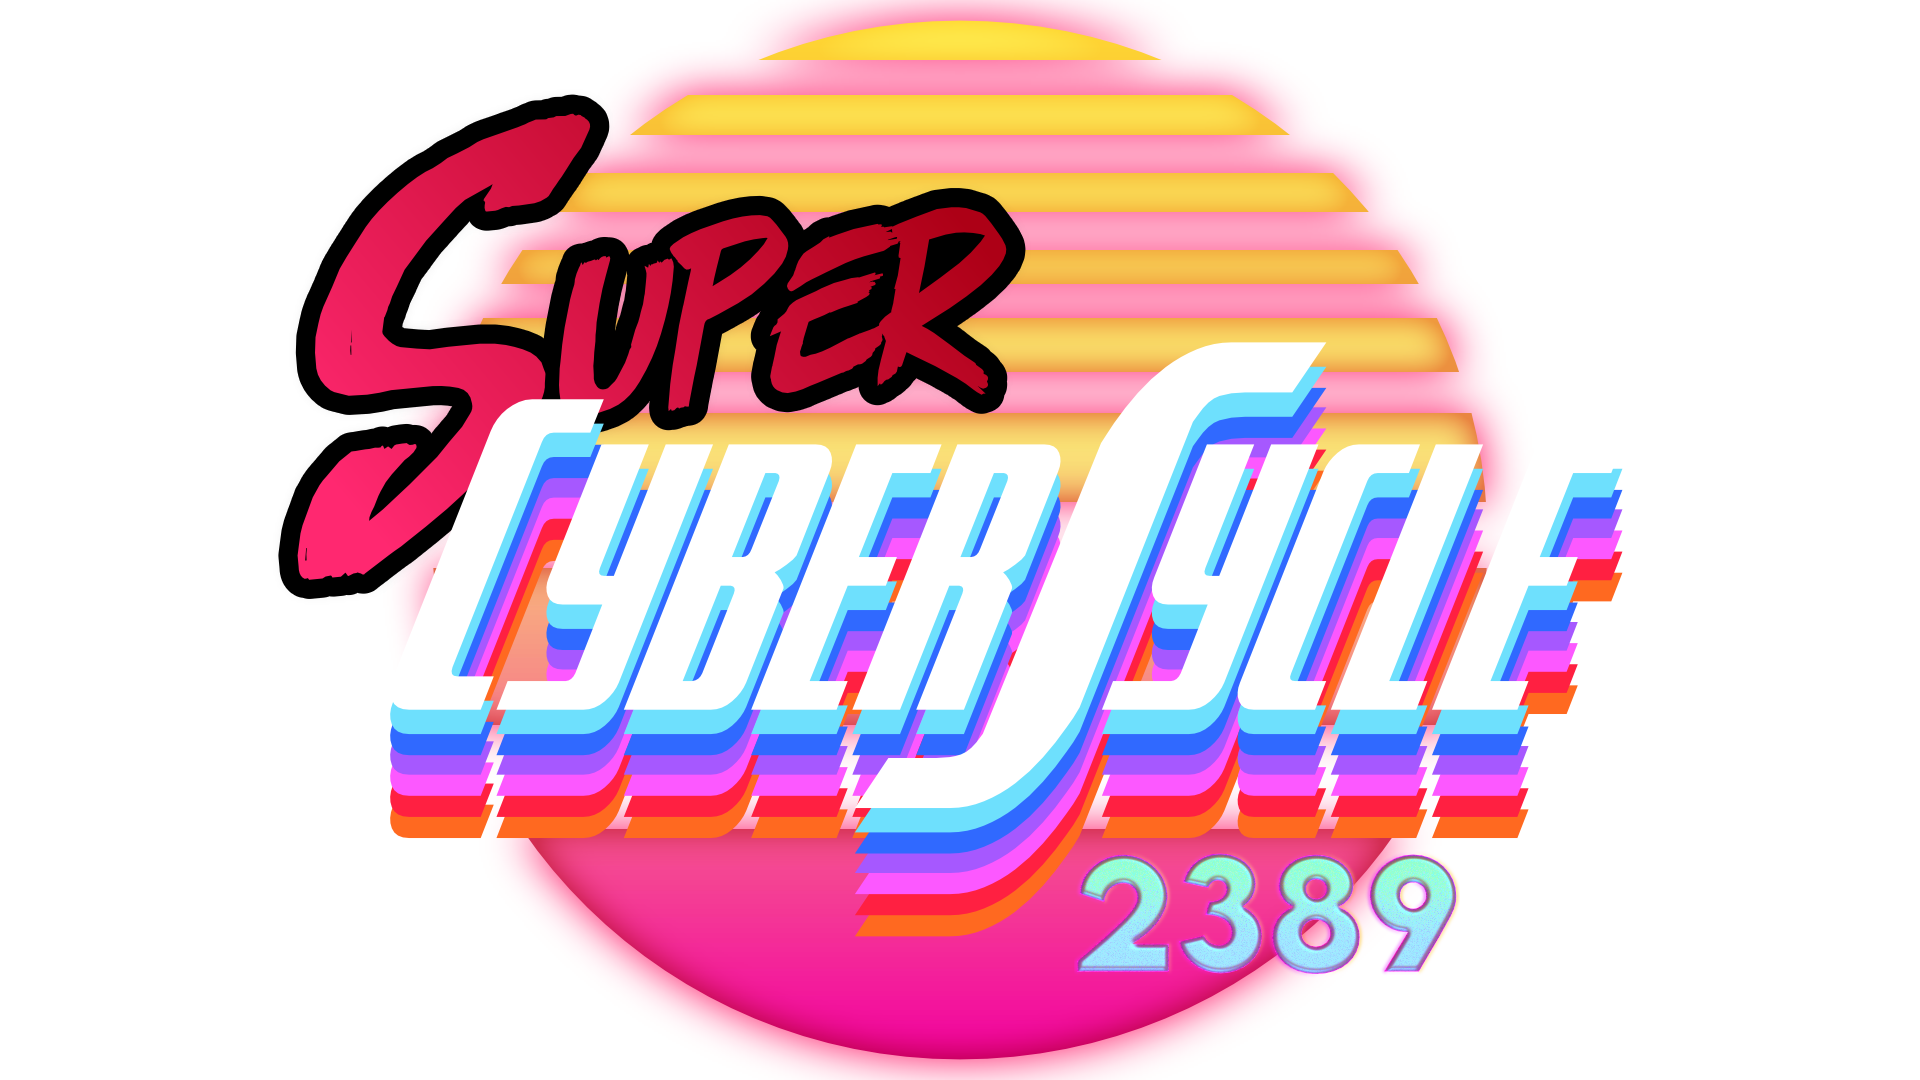 Super Cybersycle 2389